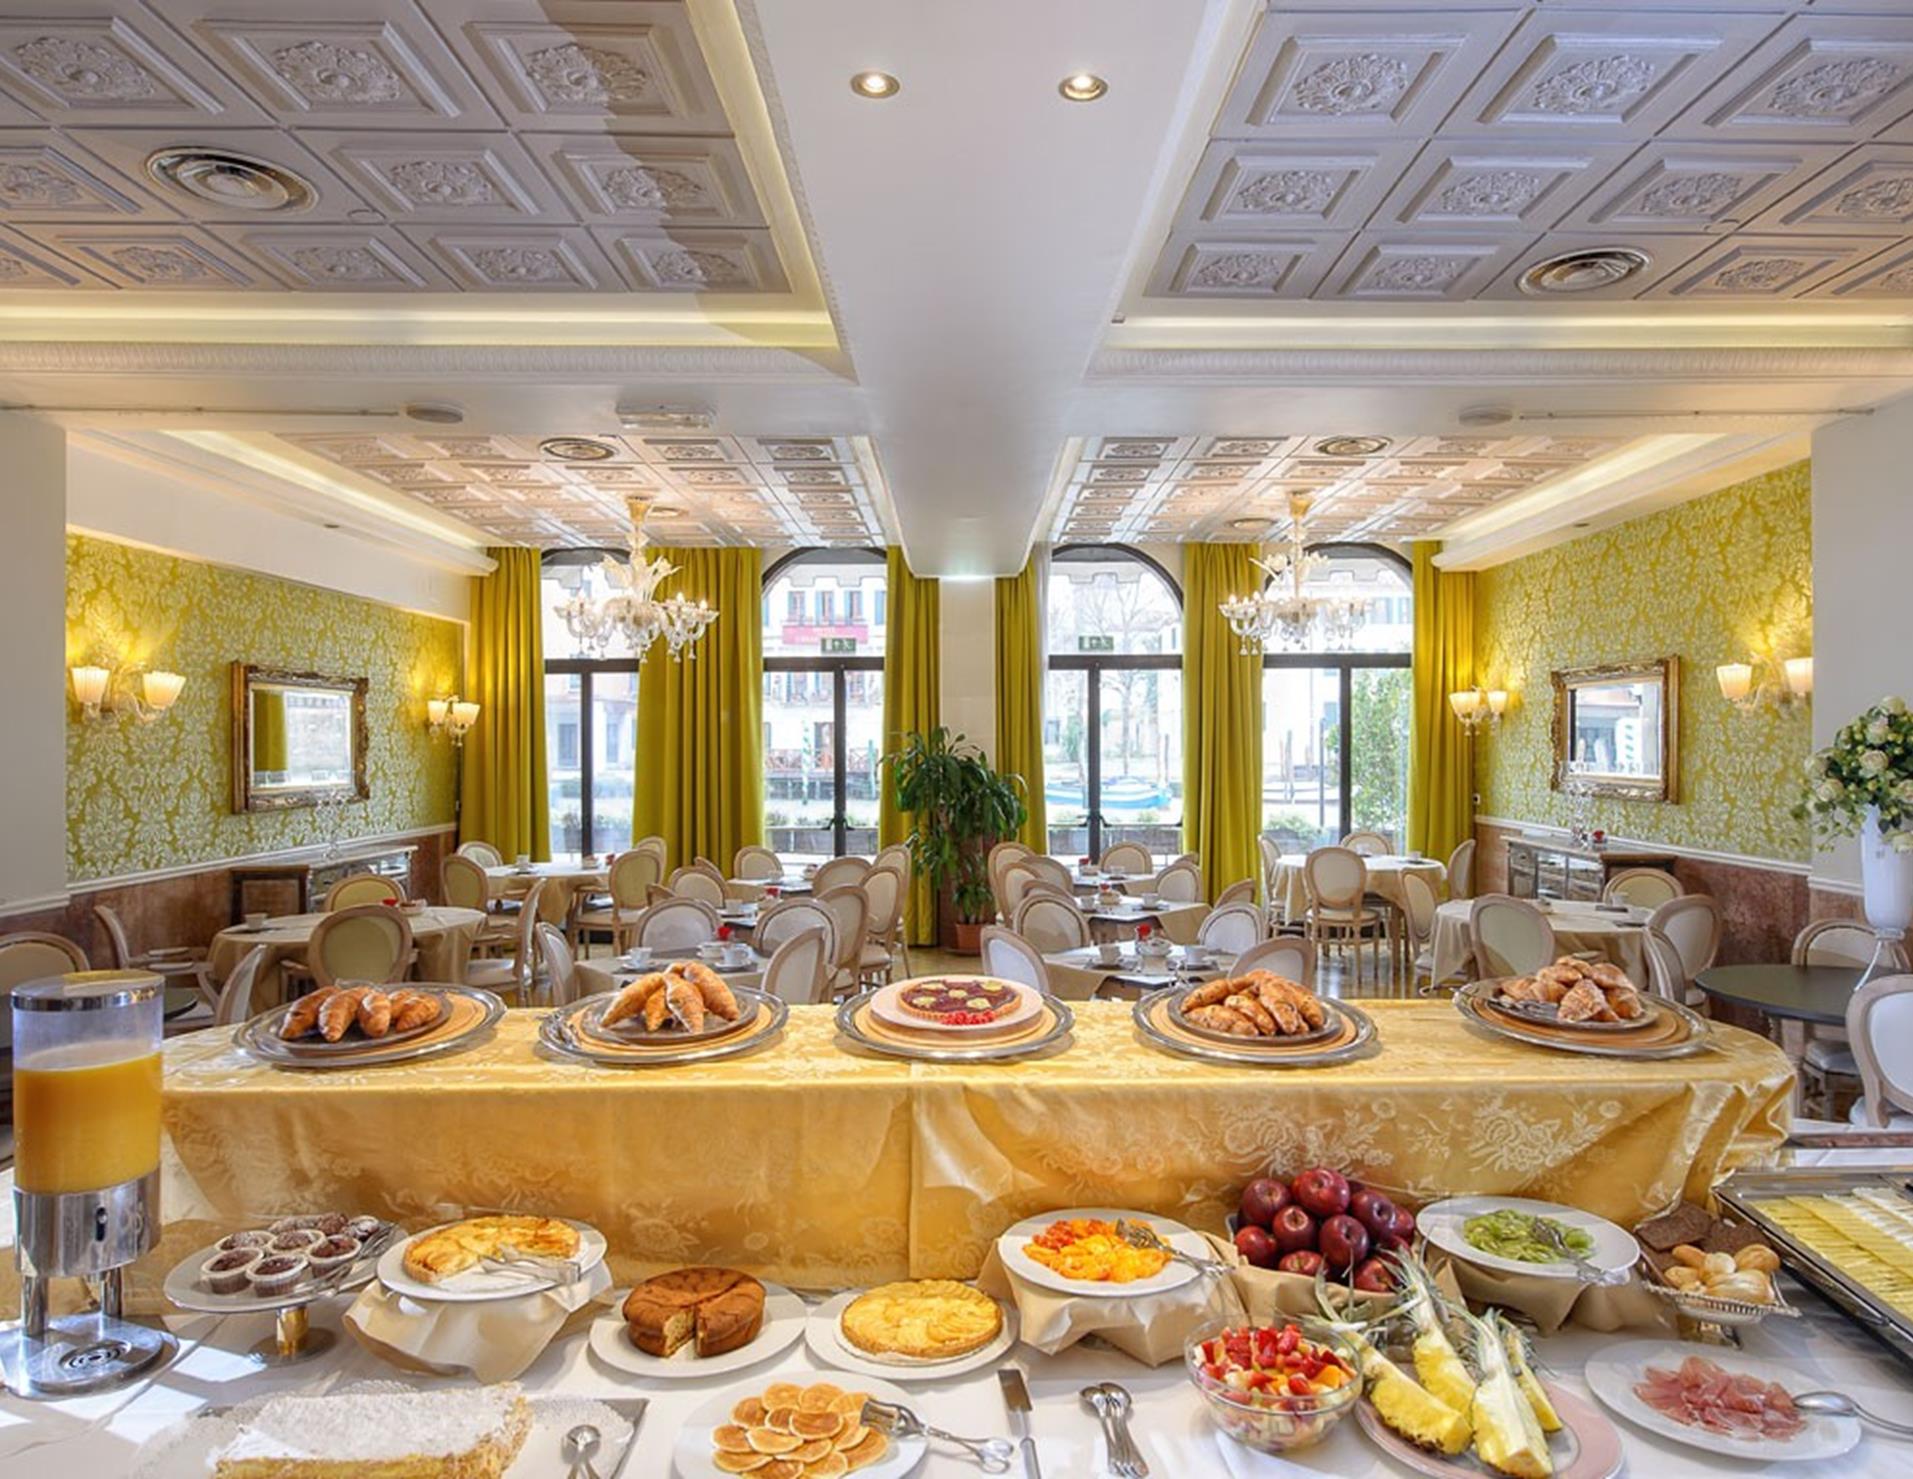 Hotel Principe - Breakfast Room